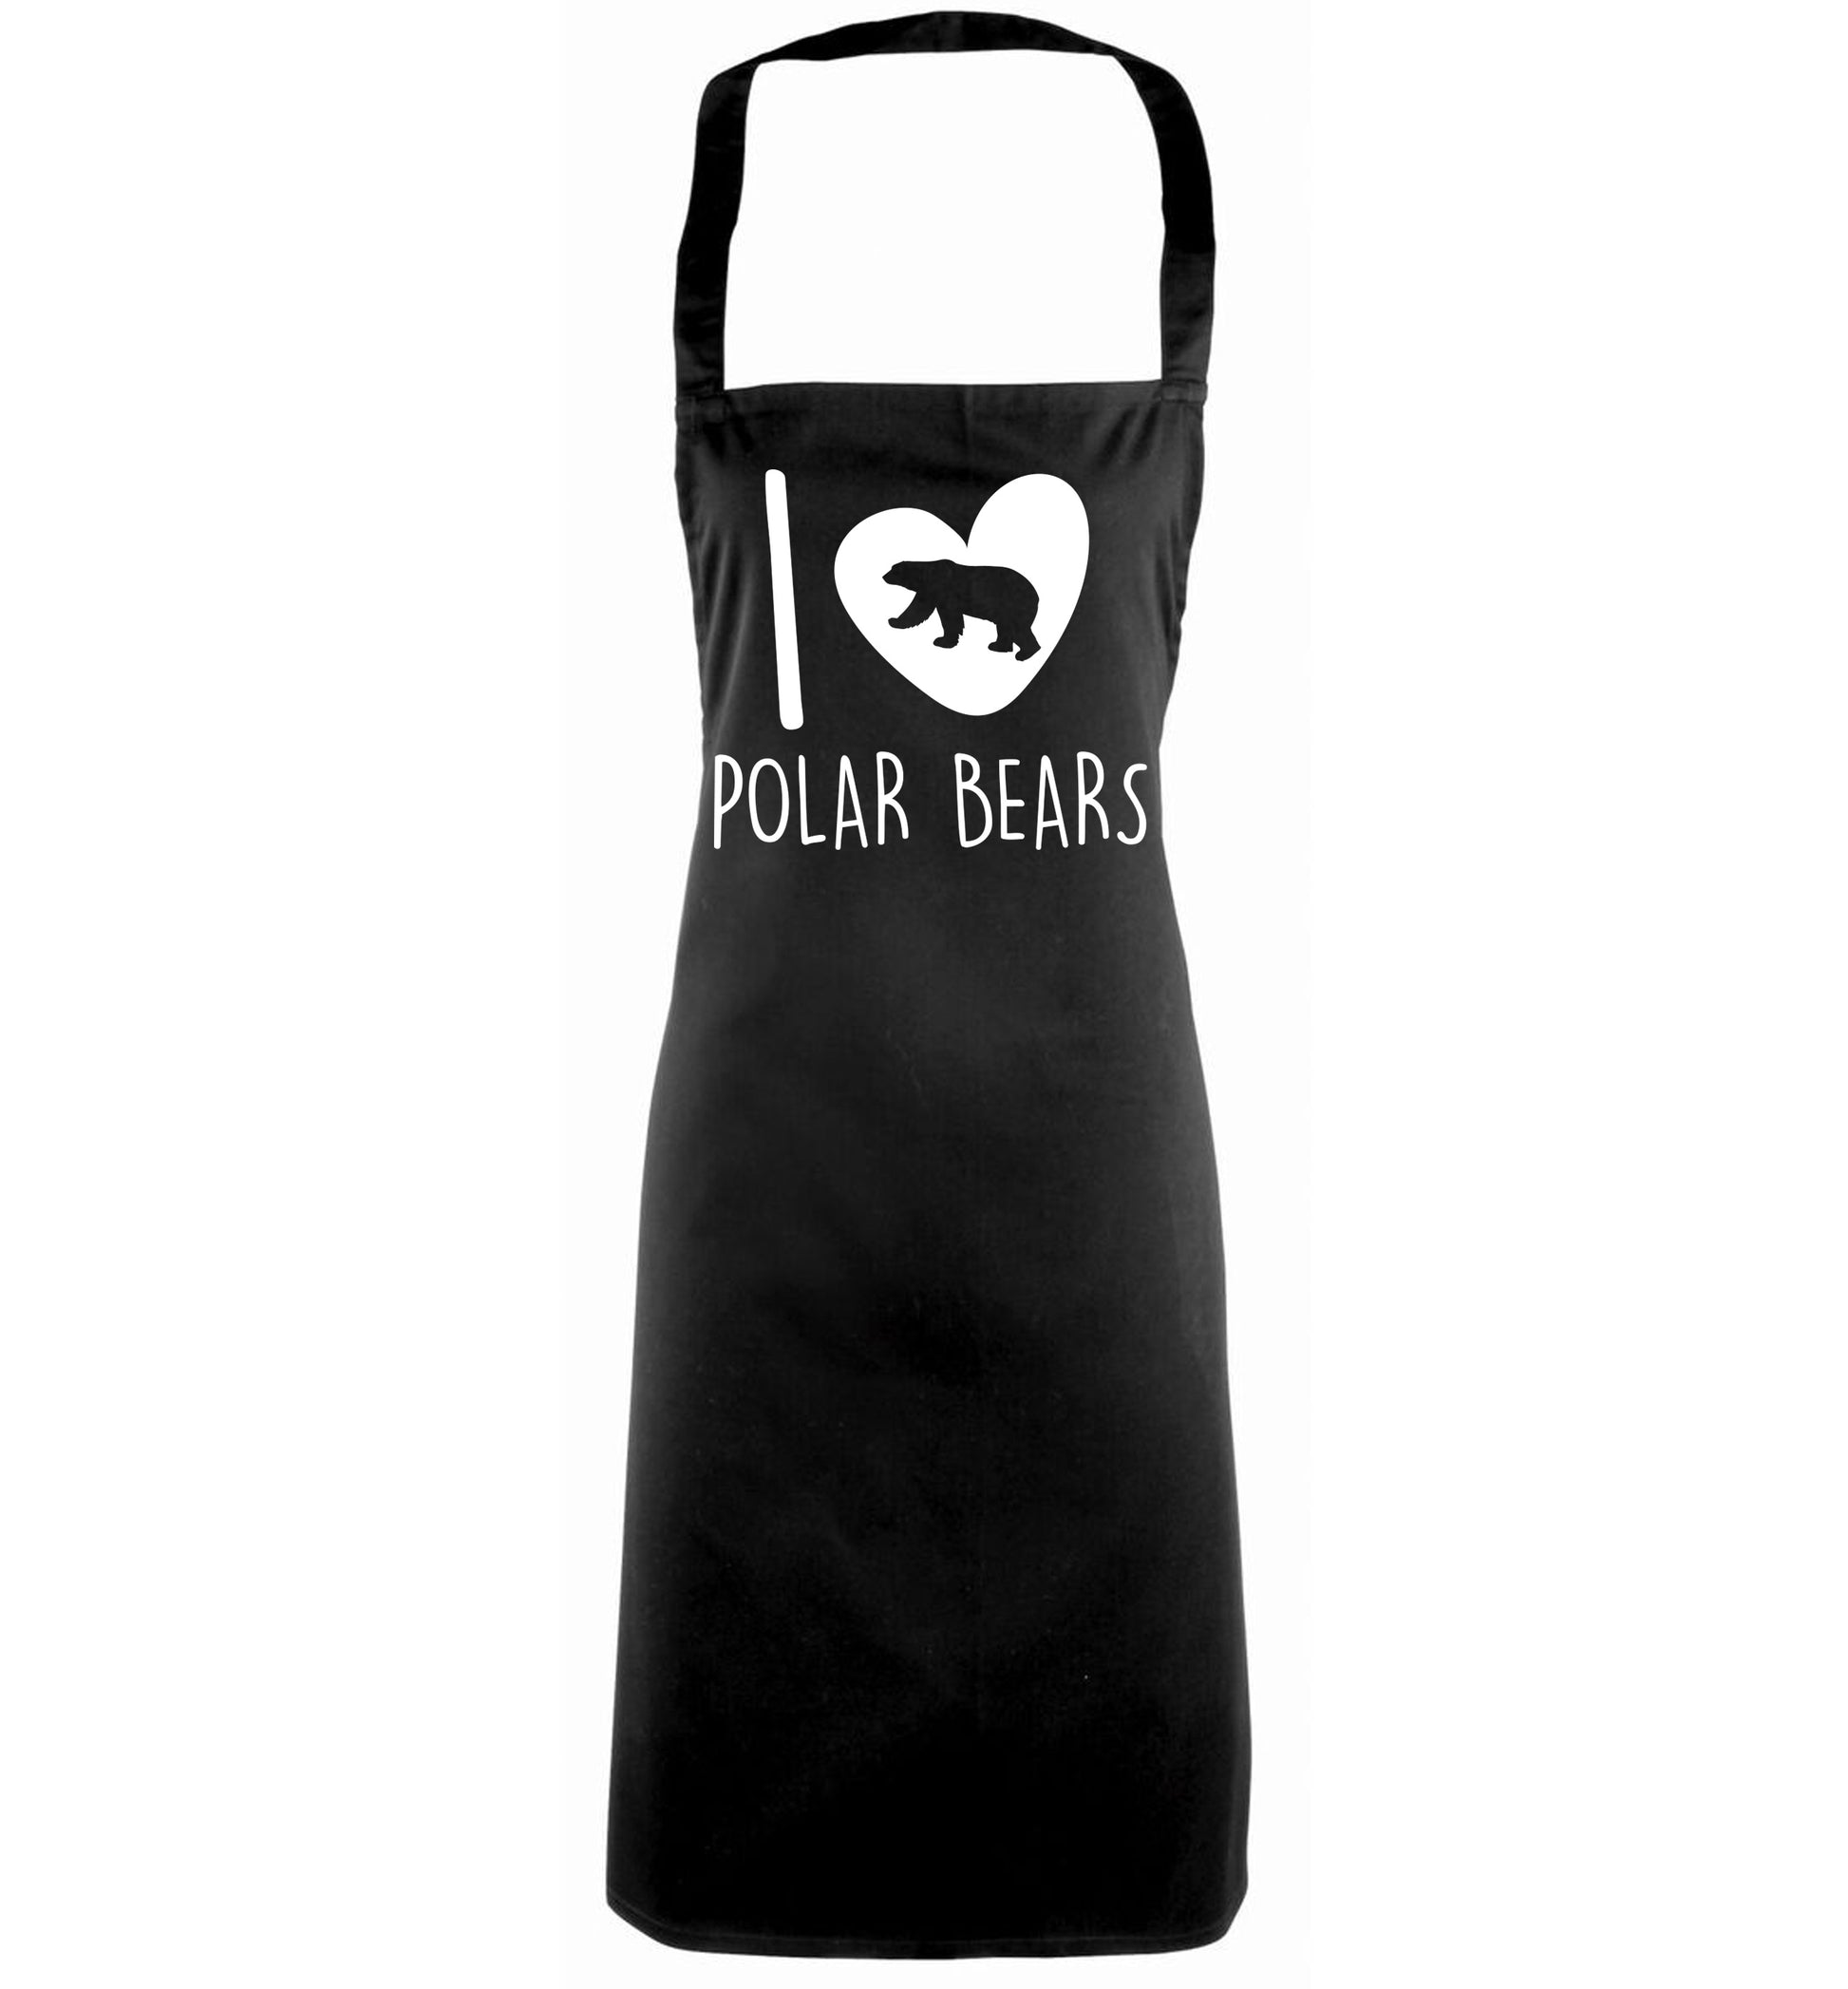 I Love Polar Bears black apron